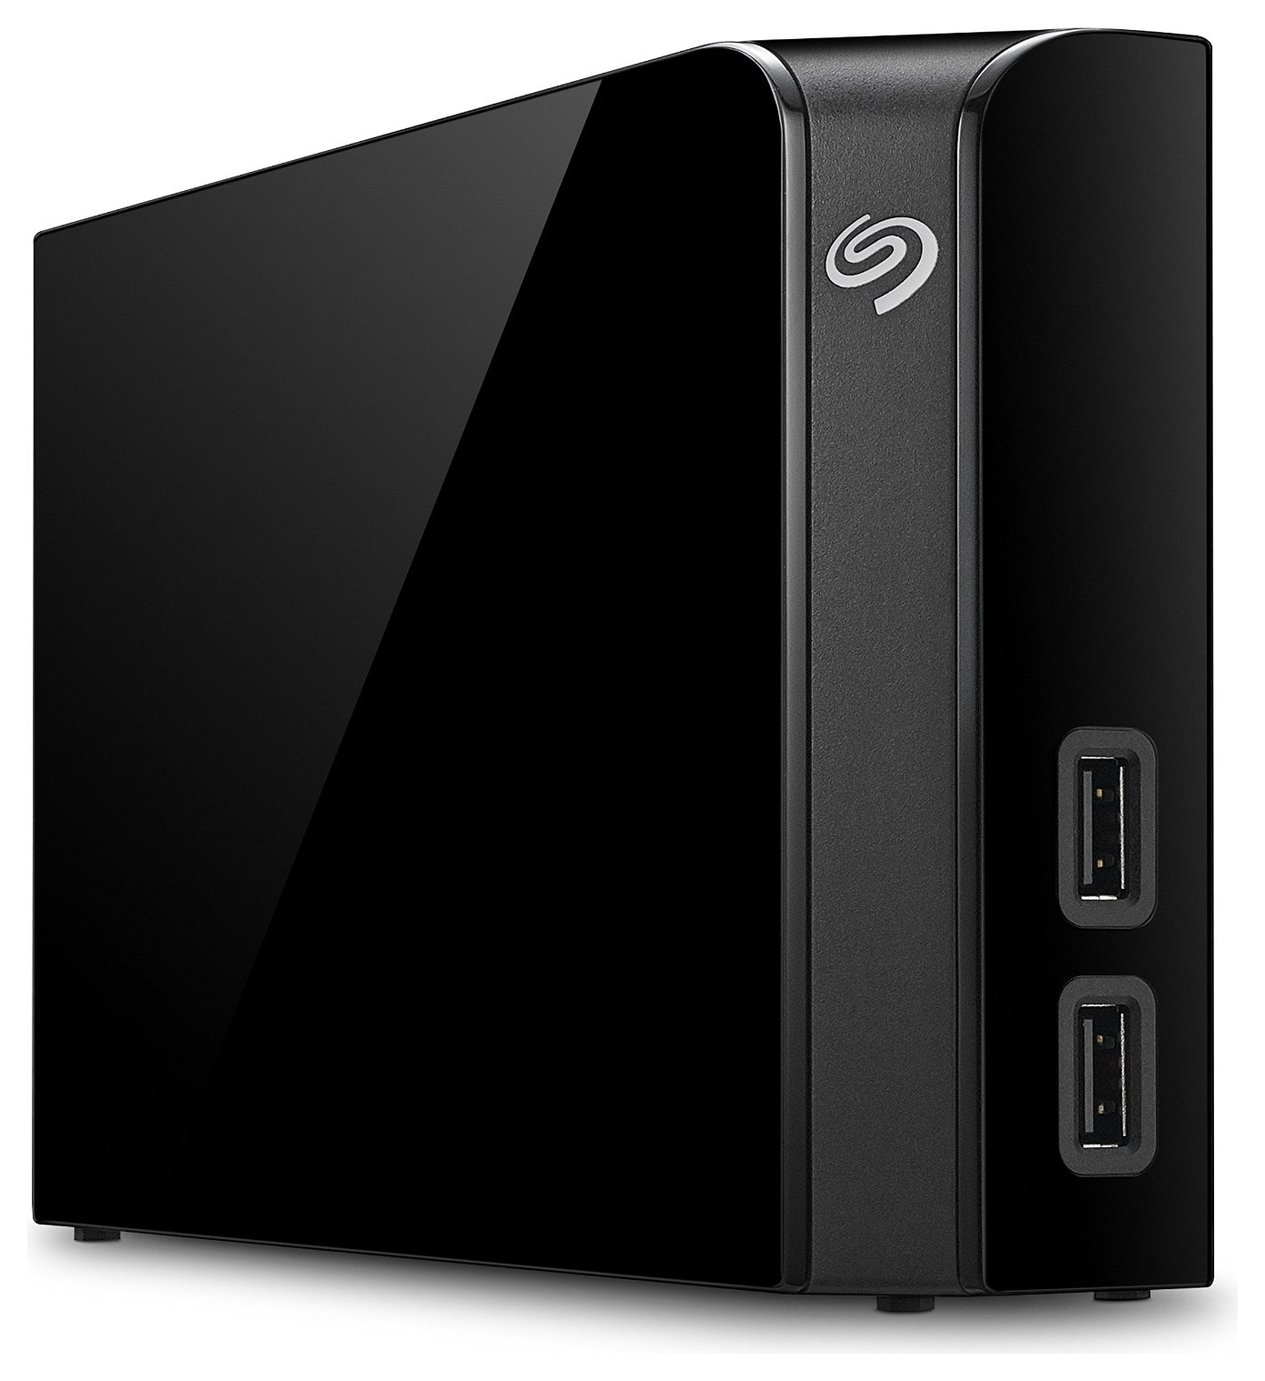 Seagate 8TB Back Up Plus Desktop Hard Drive with USB Hub